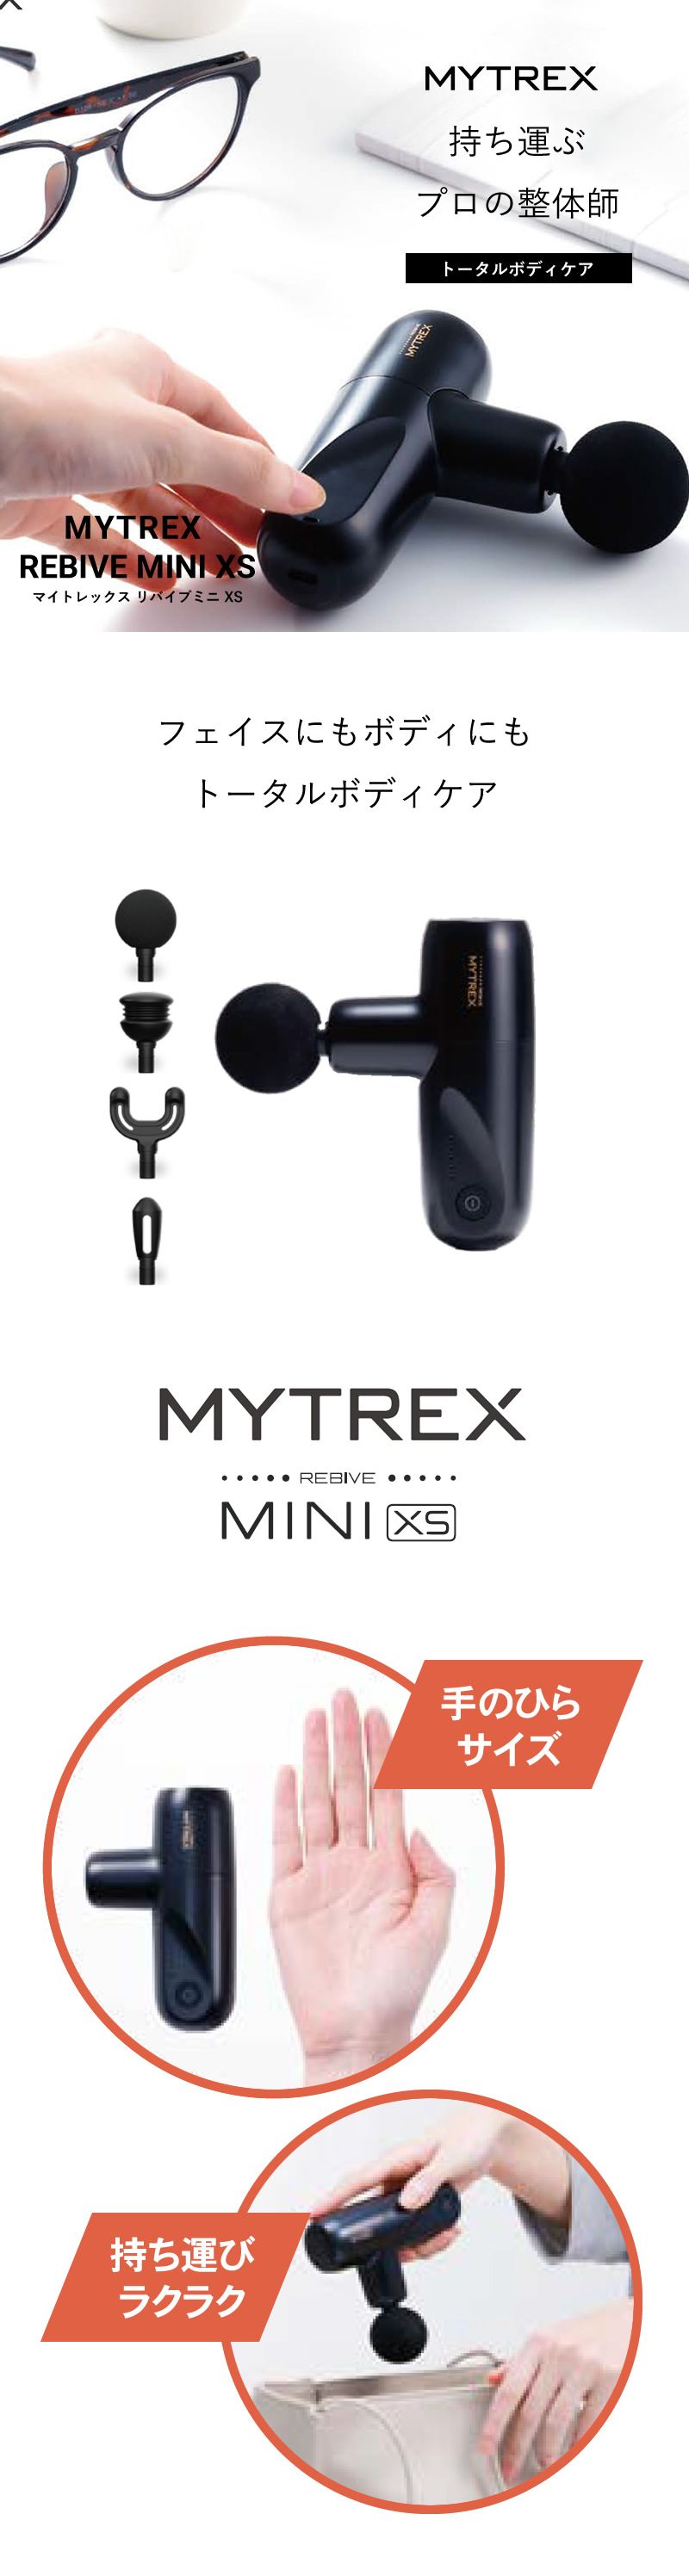 MYTREX REBIVE MINI XS  トータルボディケア